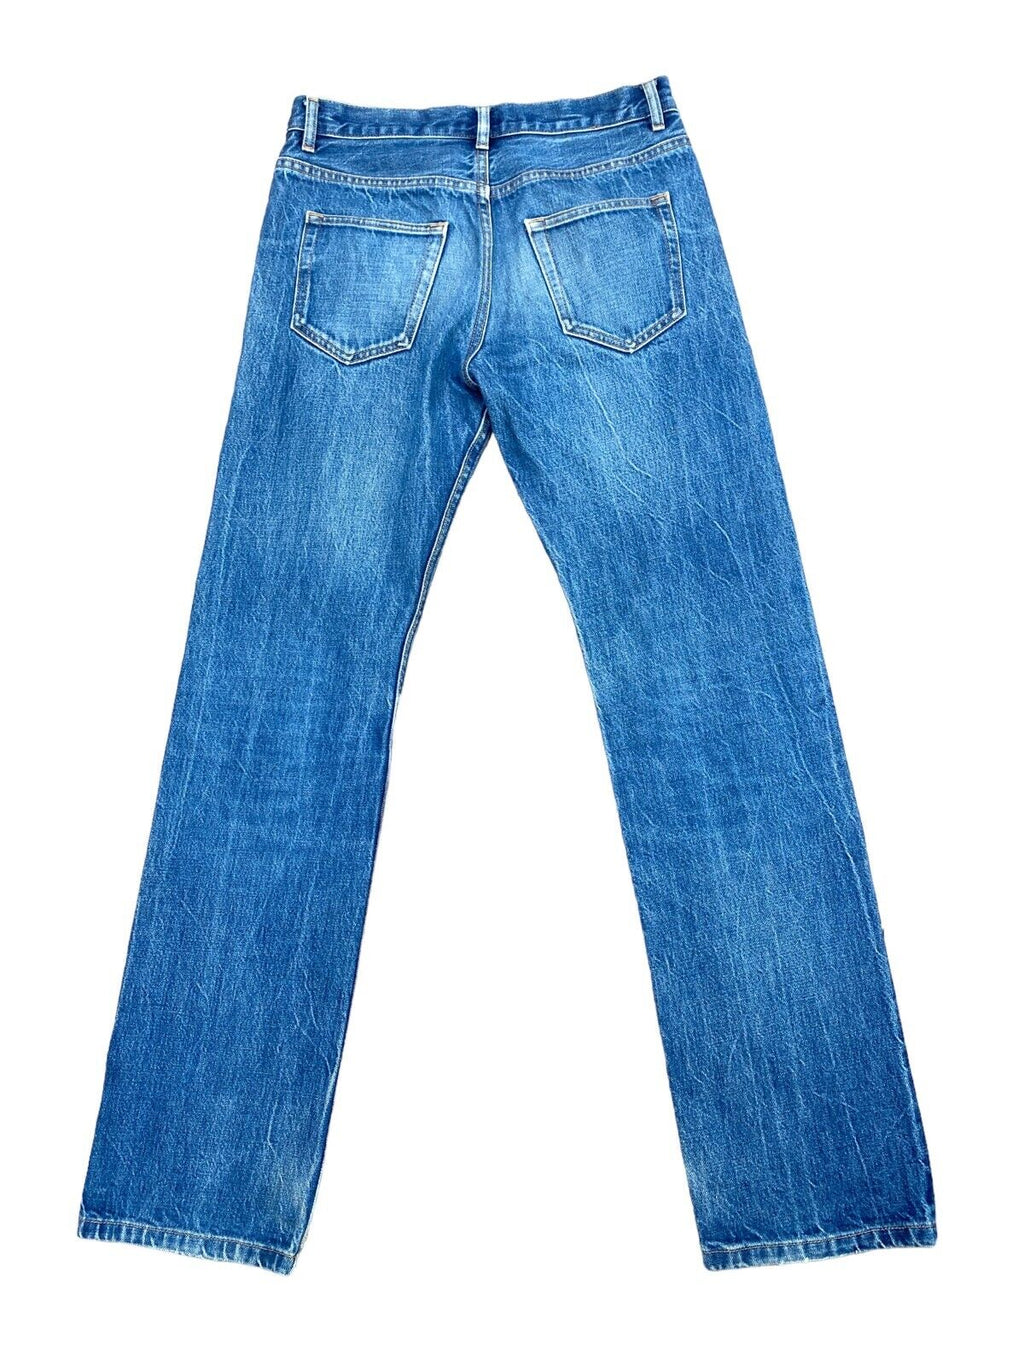 Butler Denim Jeans  Recue  Straight Fit  Size 29 APC